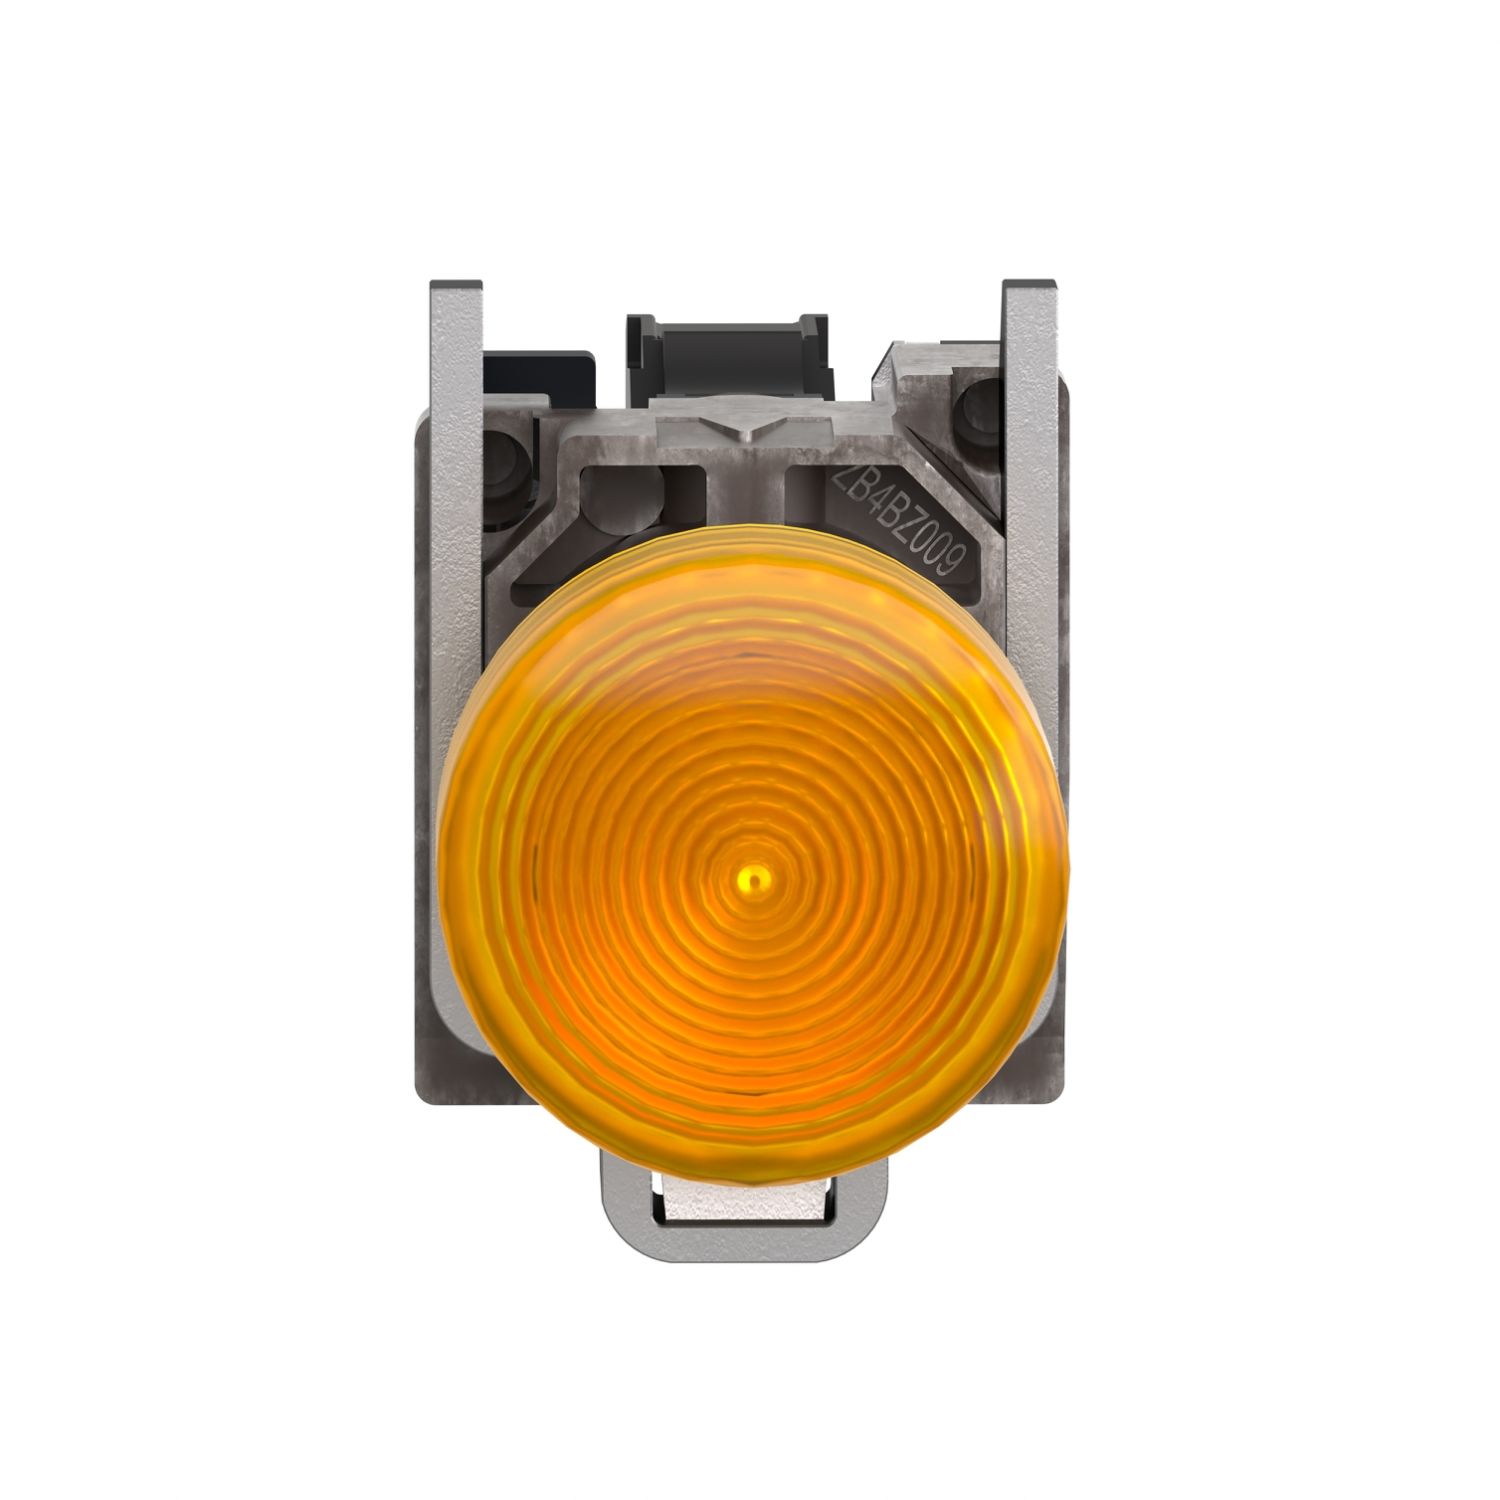 XB4BV65 Pilot light, Harmony XB4, metal, orange, 22mm, plain lens with BA9s bulb, lt 250V